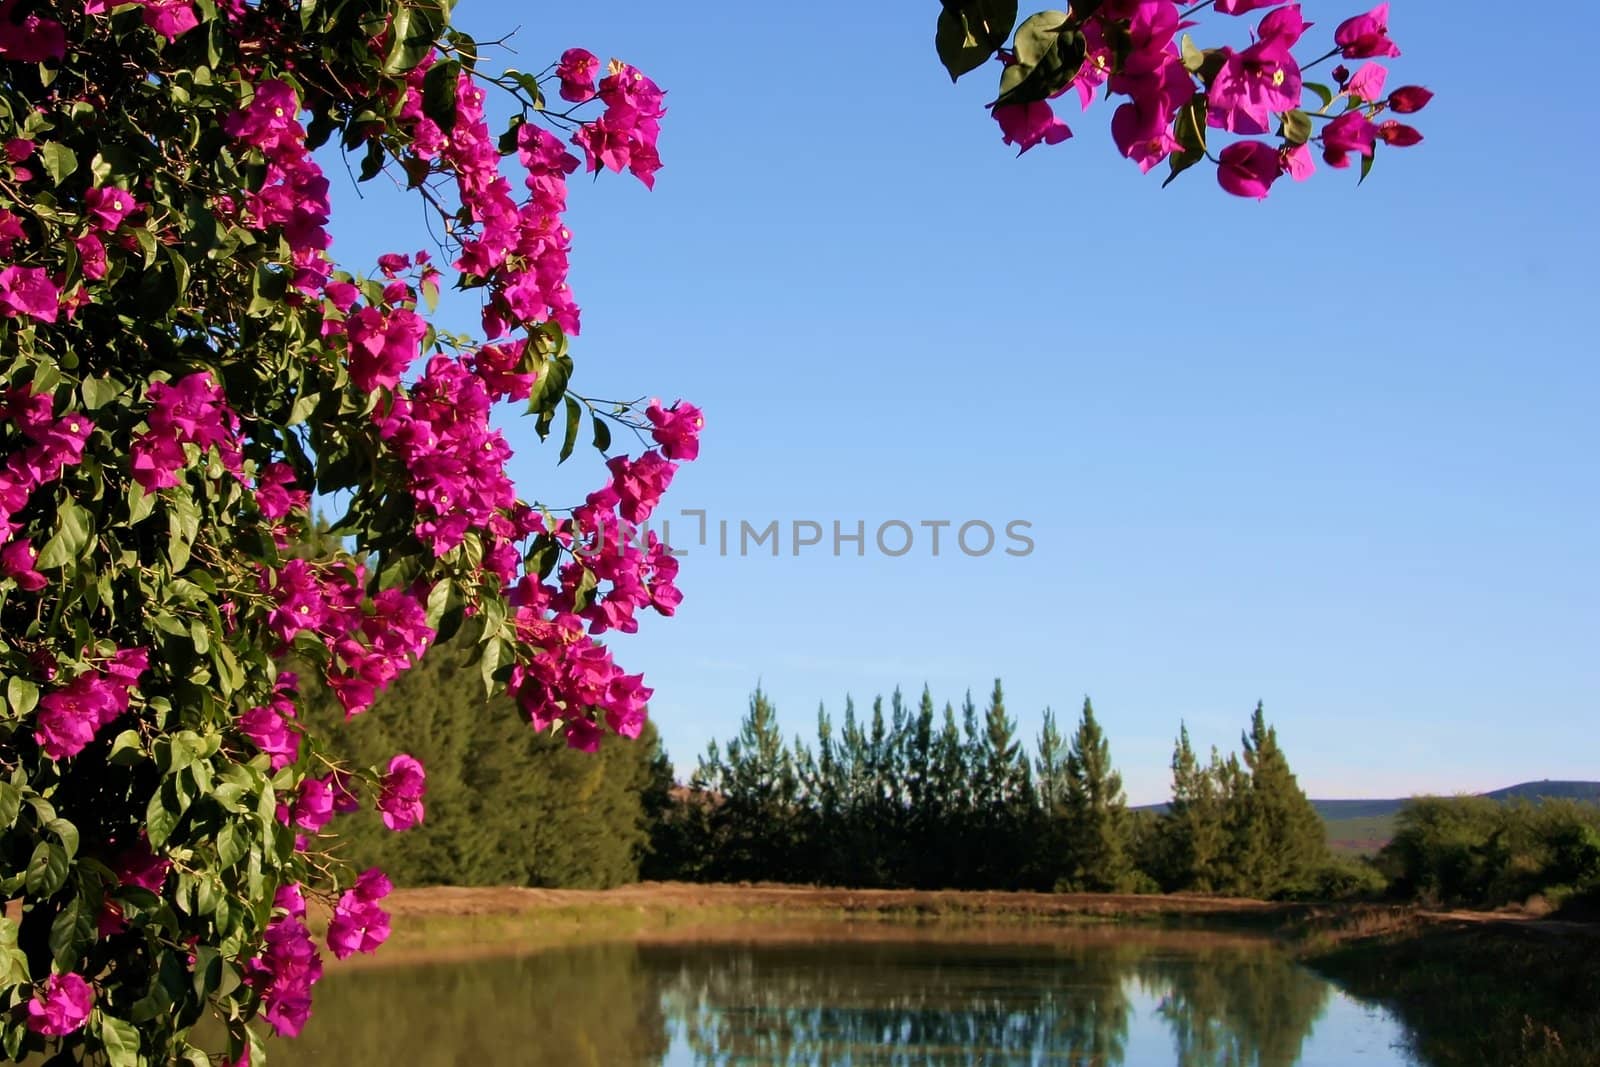 Bright bougainvillea blooms in front of a farm dam